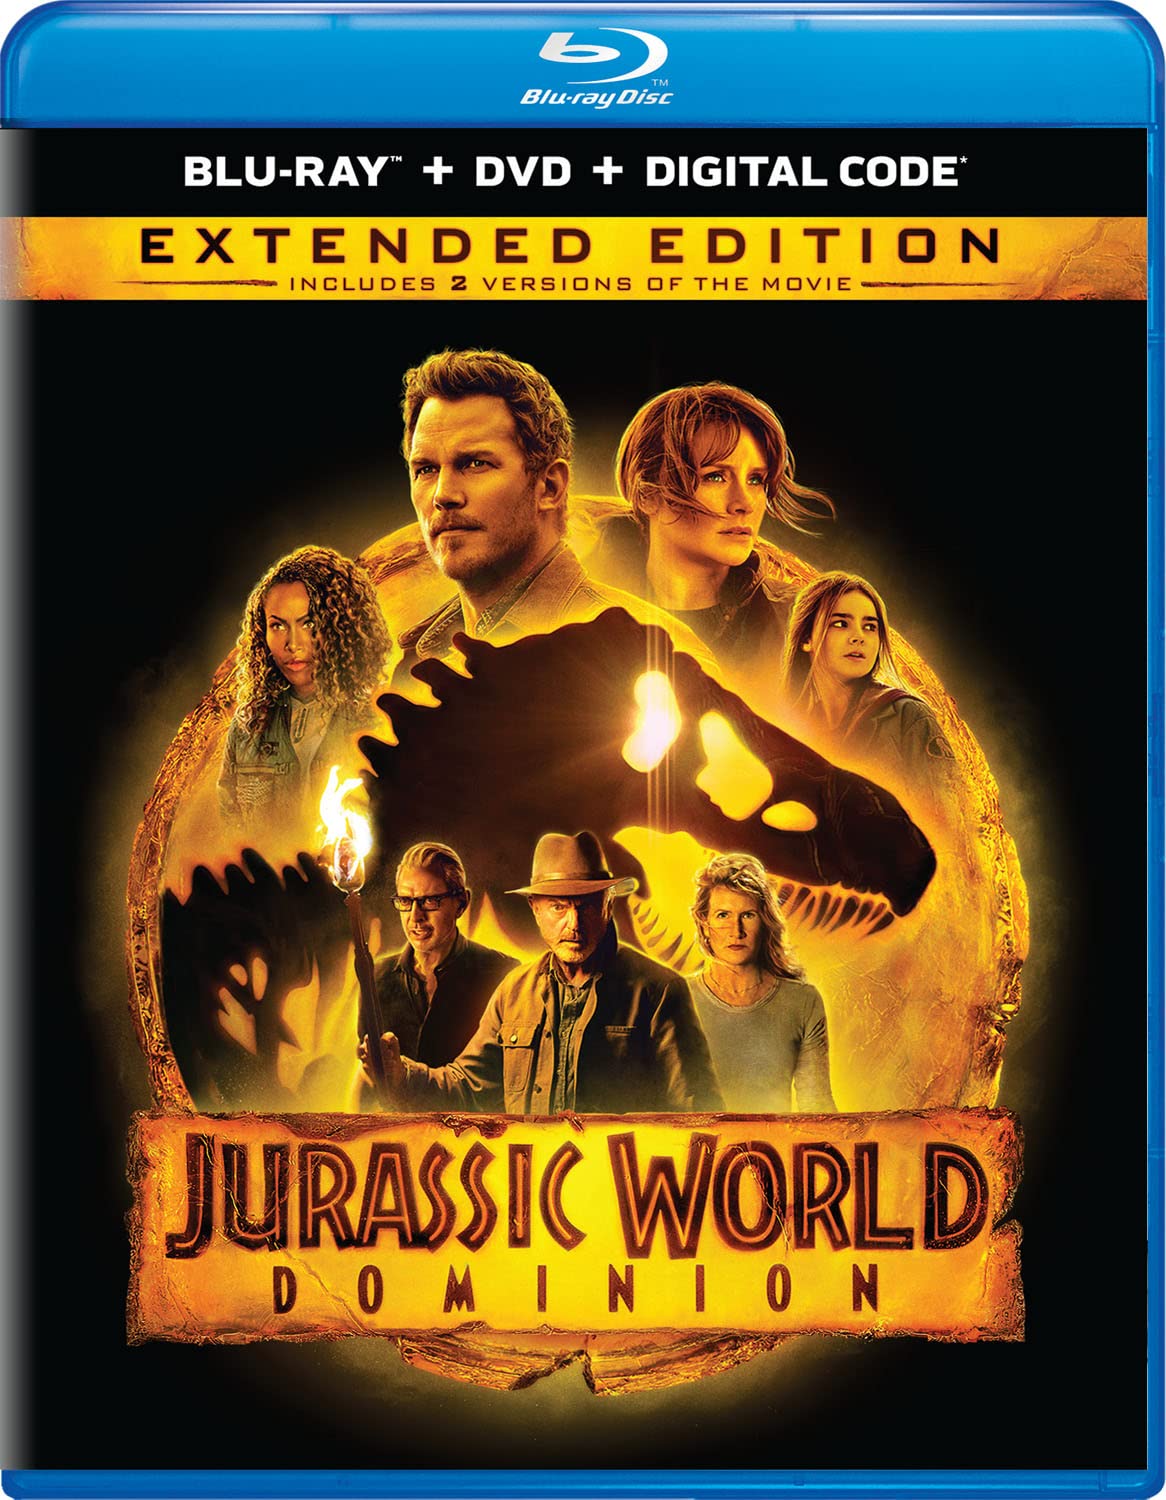 Jurassic World Dominion Release Date August 16, 2022